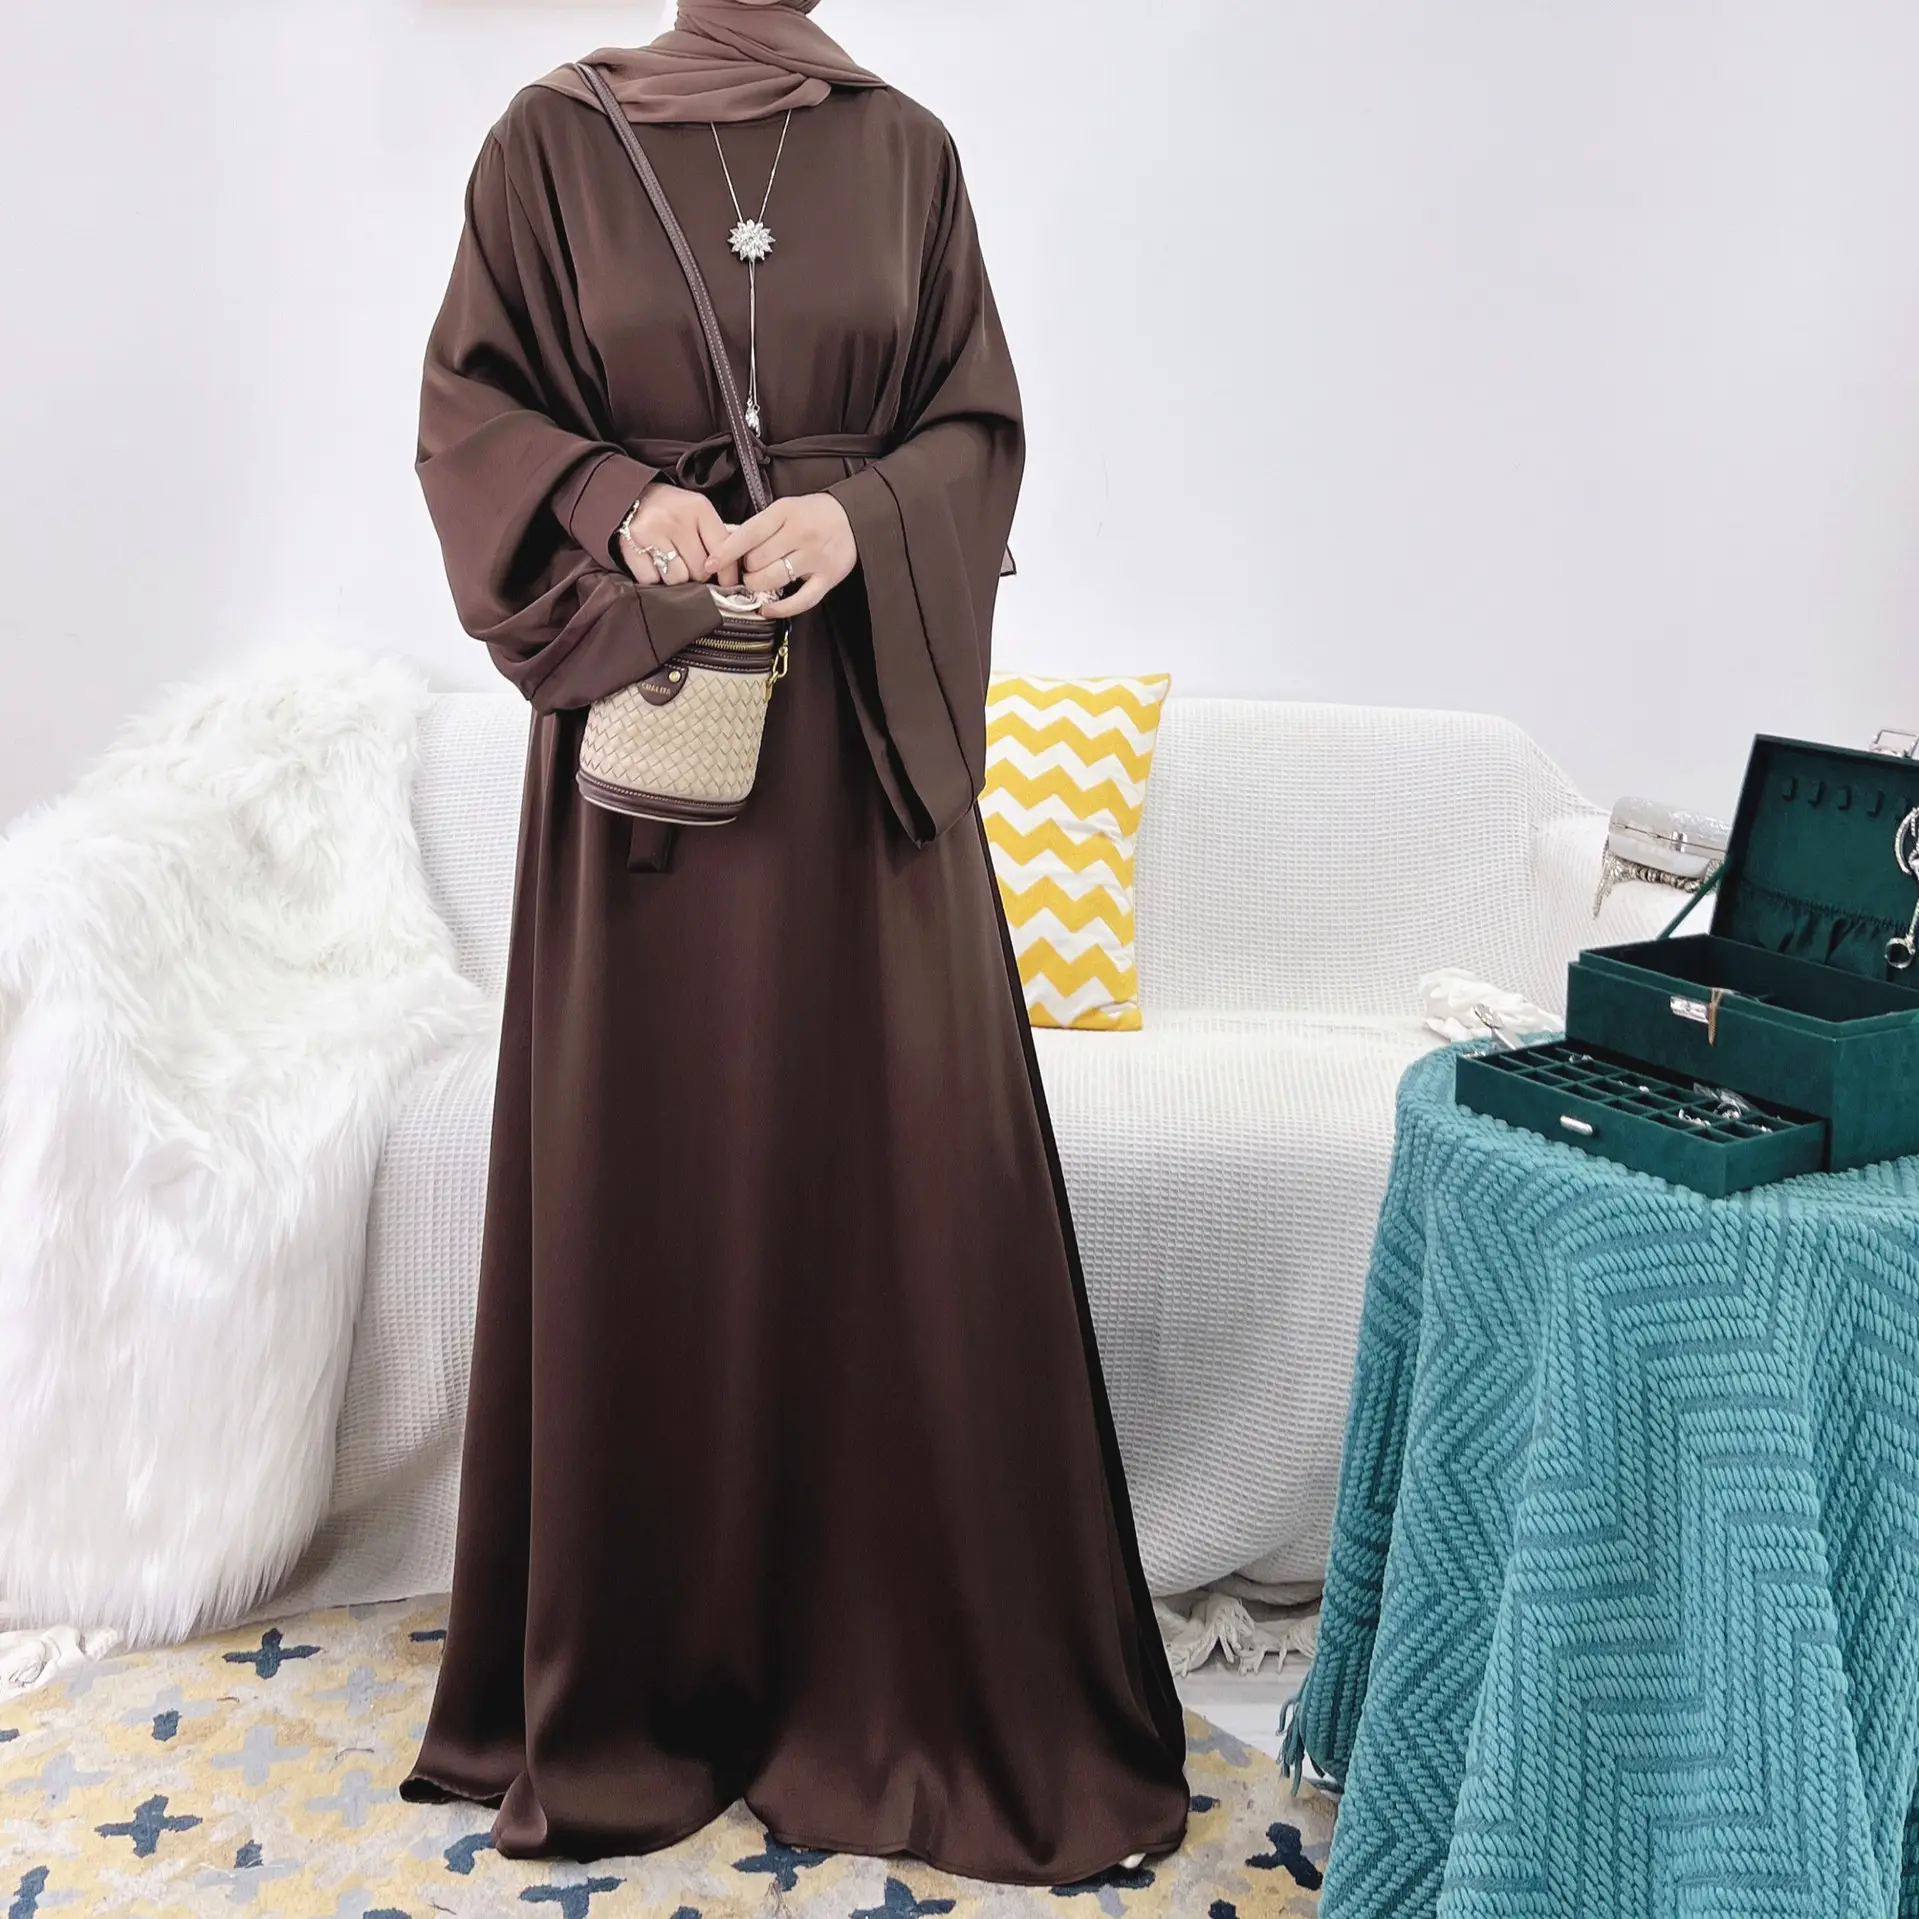 Satin Islamic Dresses women India pakistan dubai clothing wholesale muslim clothing for woman high waist plus size abaya